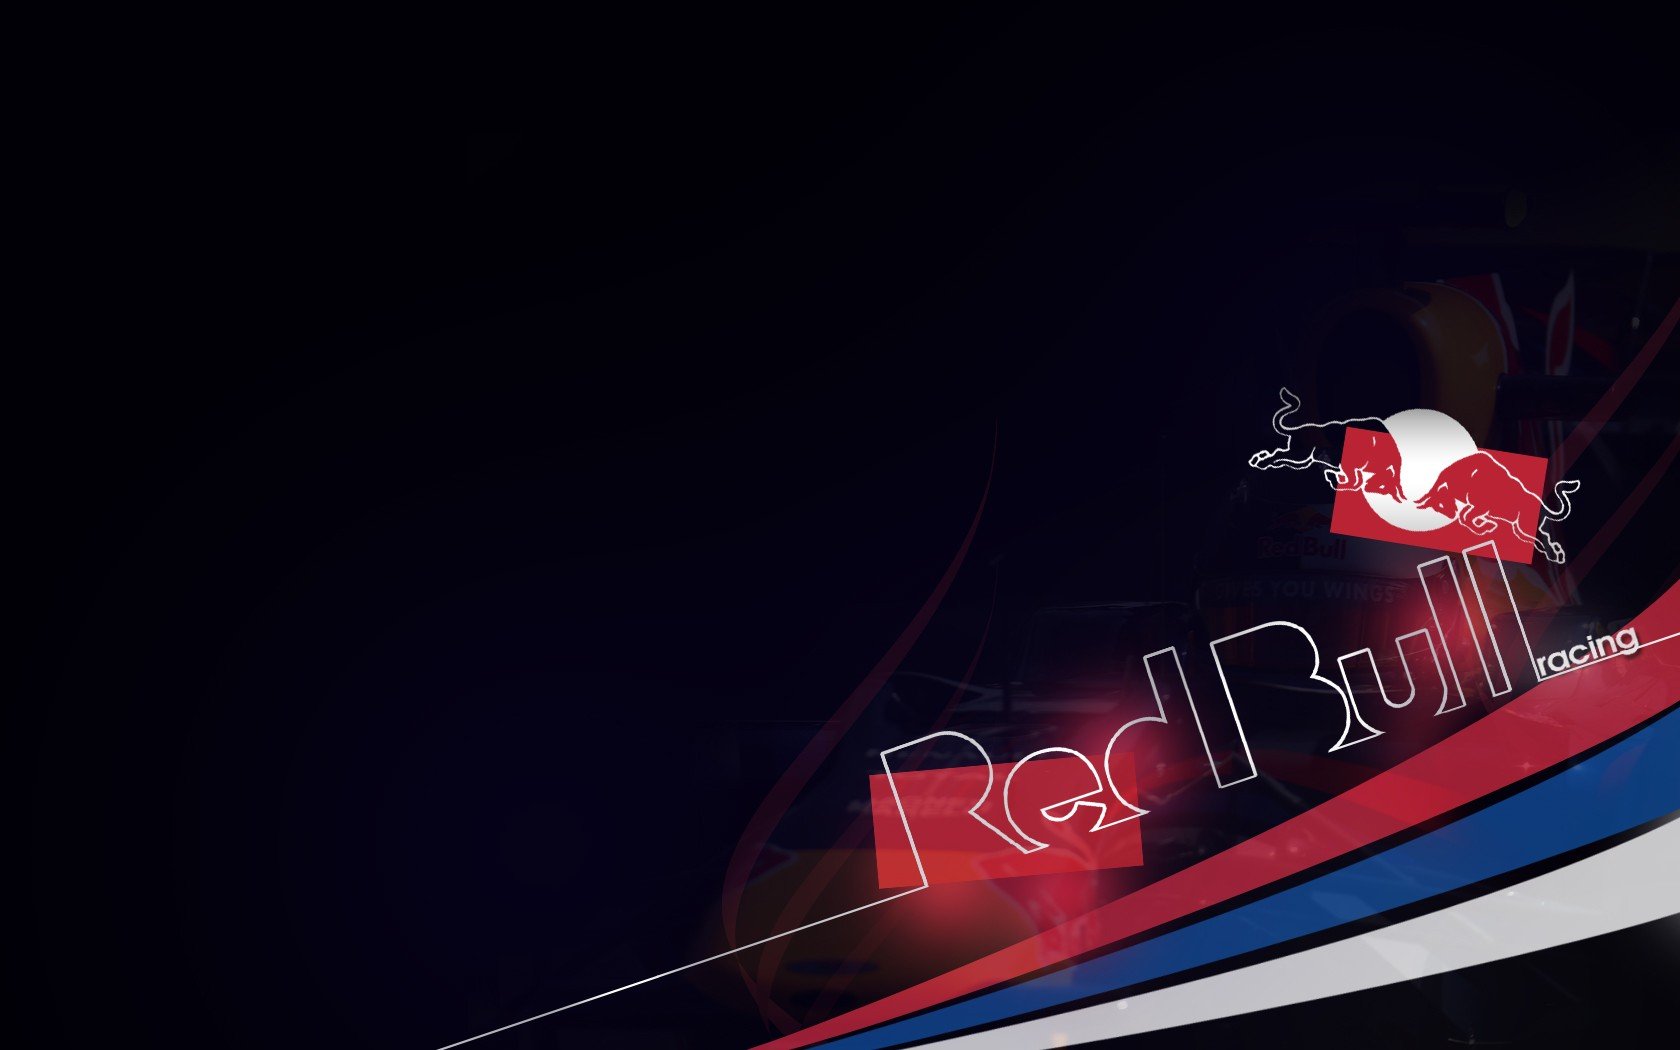 Red Bull, Racing, Energy drinks Wallpaper